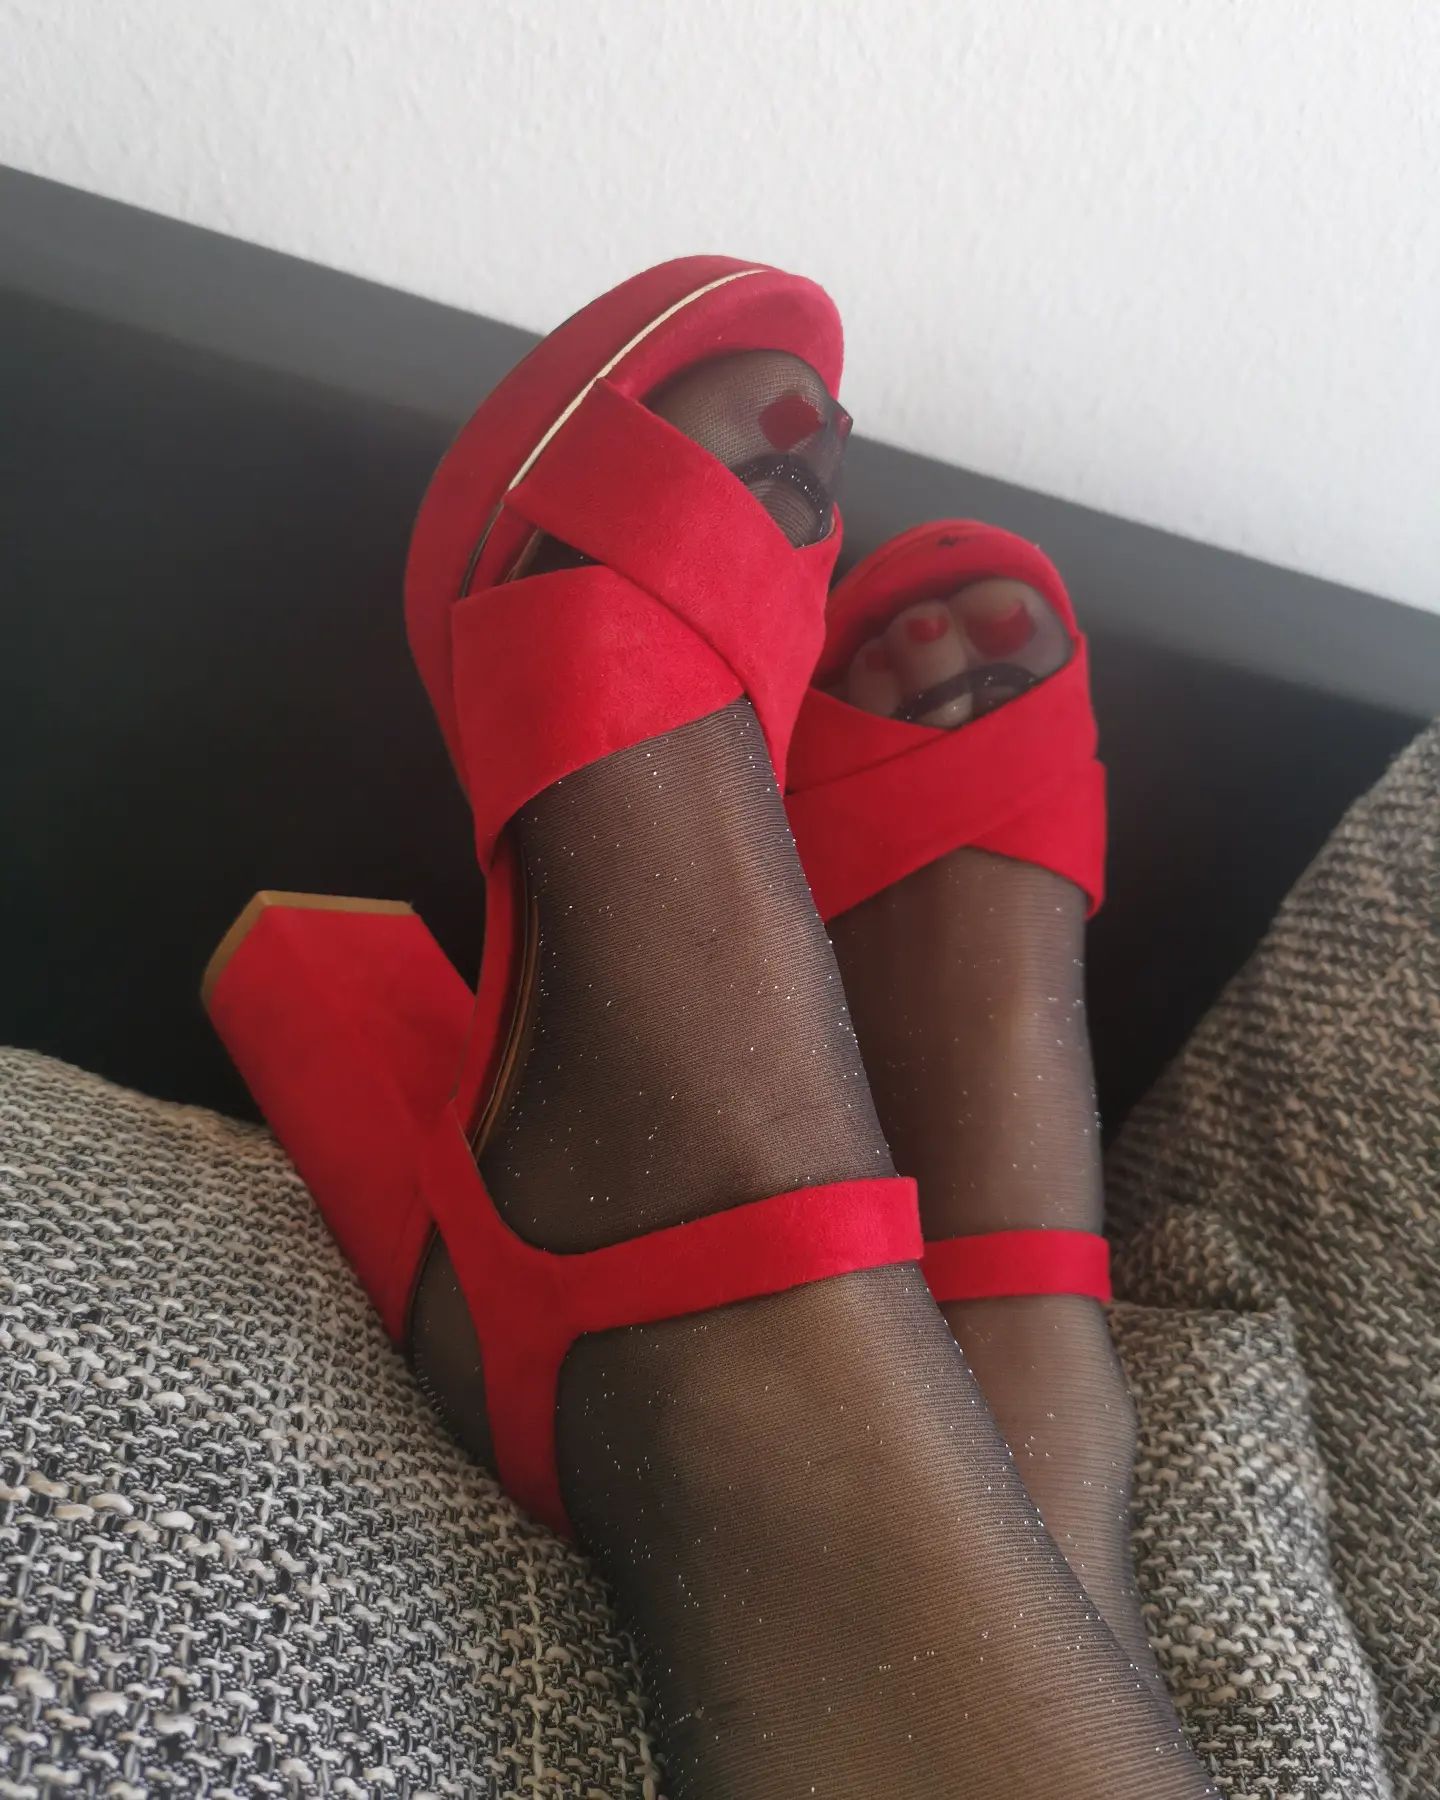 #legslegslegs #highheels #red #homealone #littledirtysecret #legs #pantihose #shinypantihose #lacepanties #feet #lingerie #footfetishnation #foot #legday #model #sexy #legsfordays #nylon #fit #love #fashion #longlegs #girl #beautiful #body #beauty #redsandals #follow #feetfetishworld #feetworship